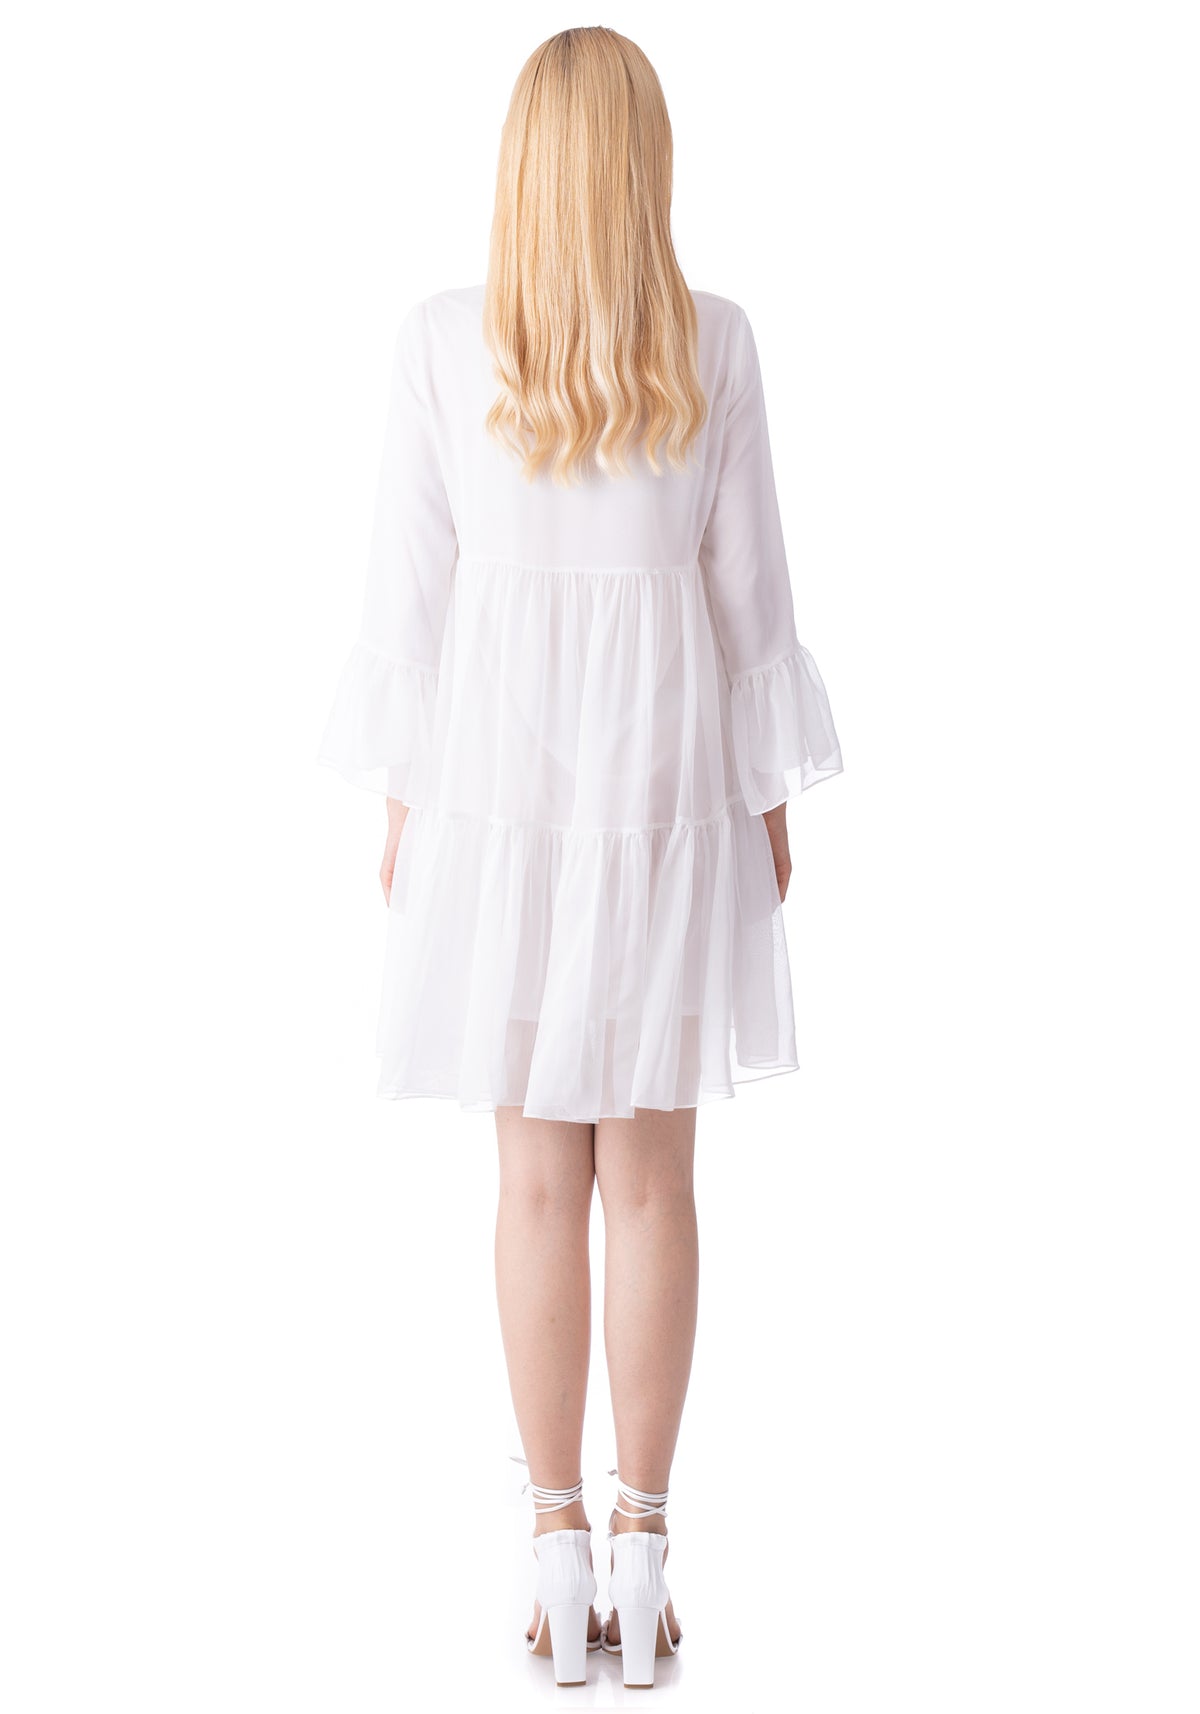 Embroidered Short White Dress